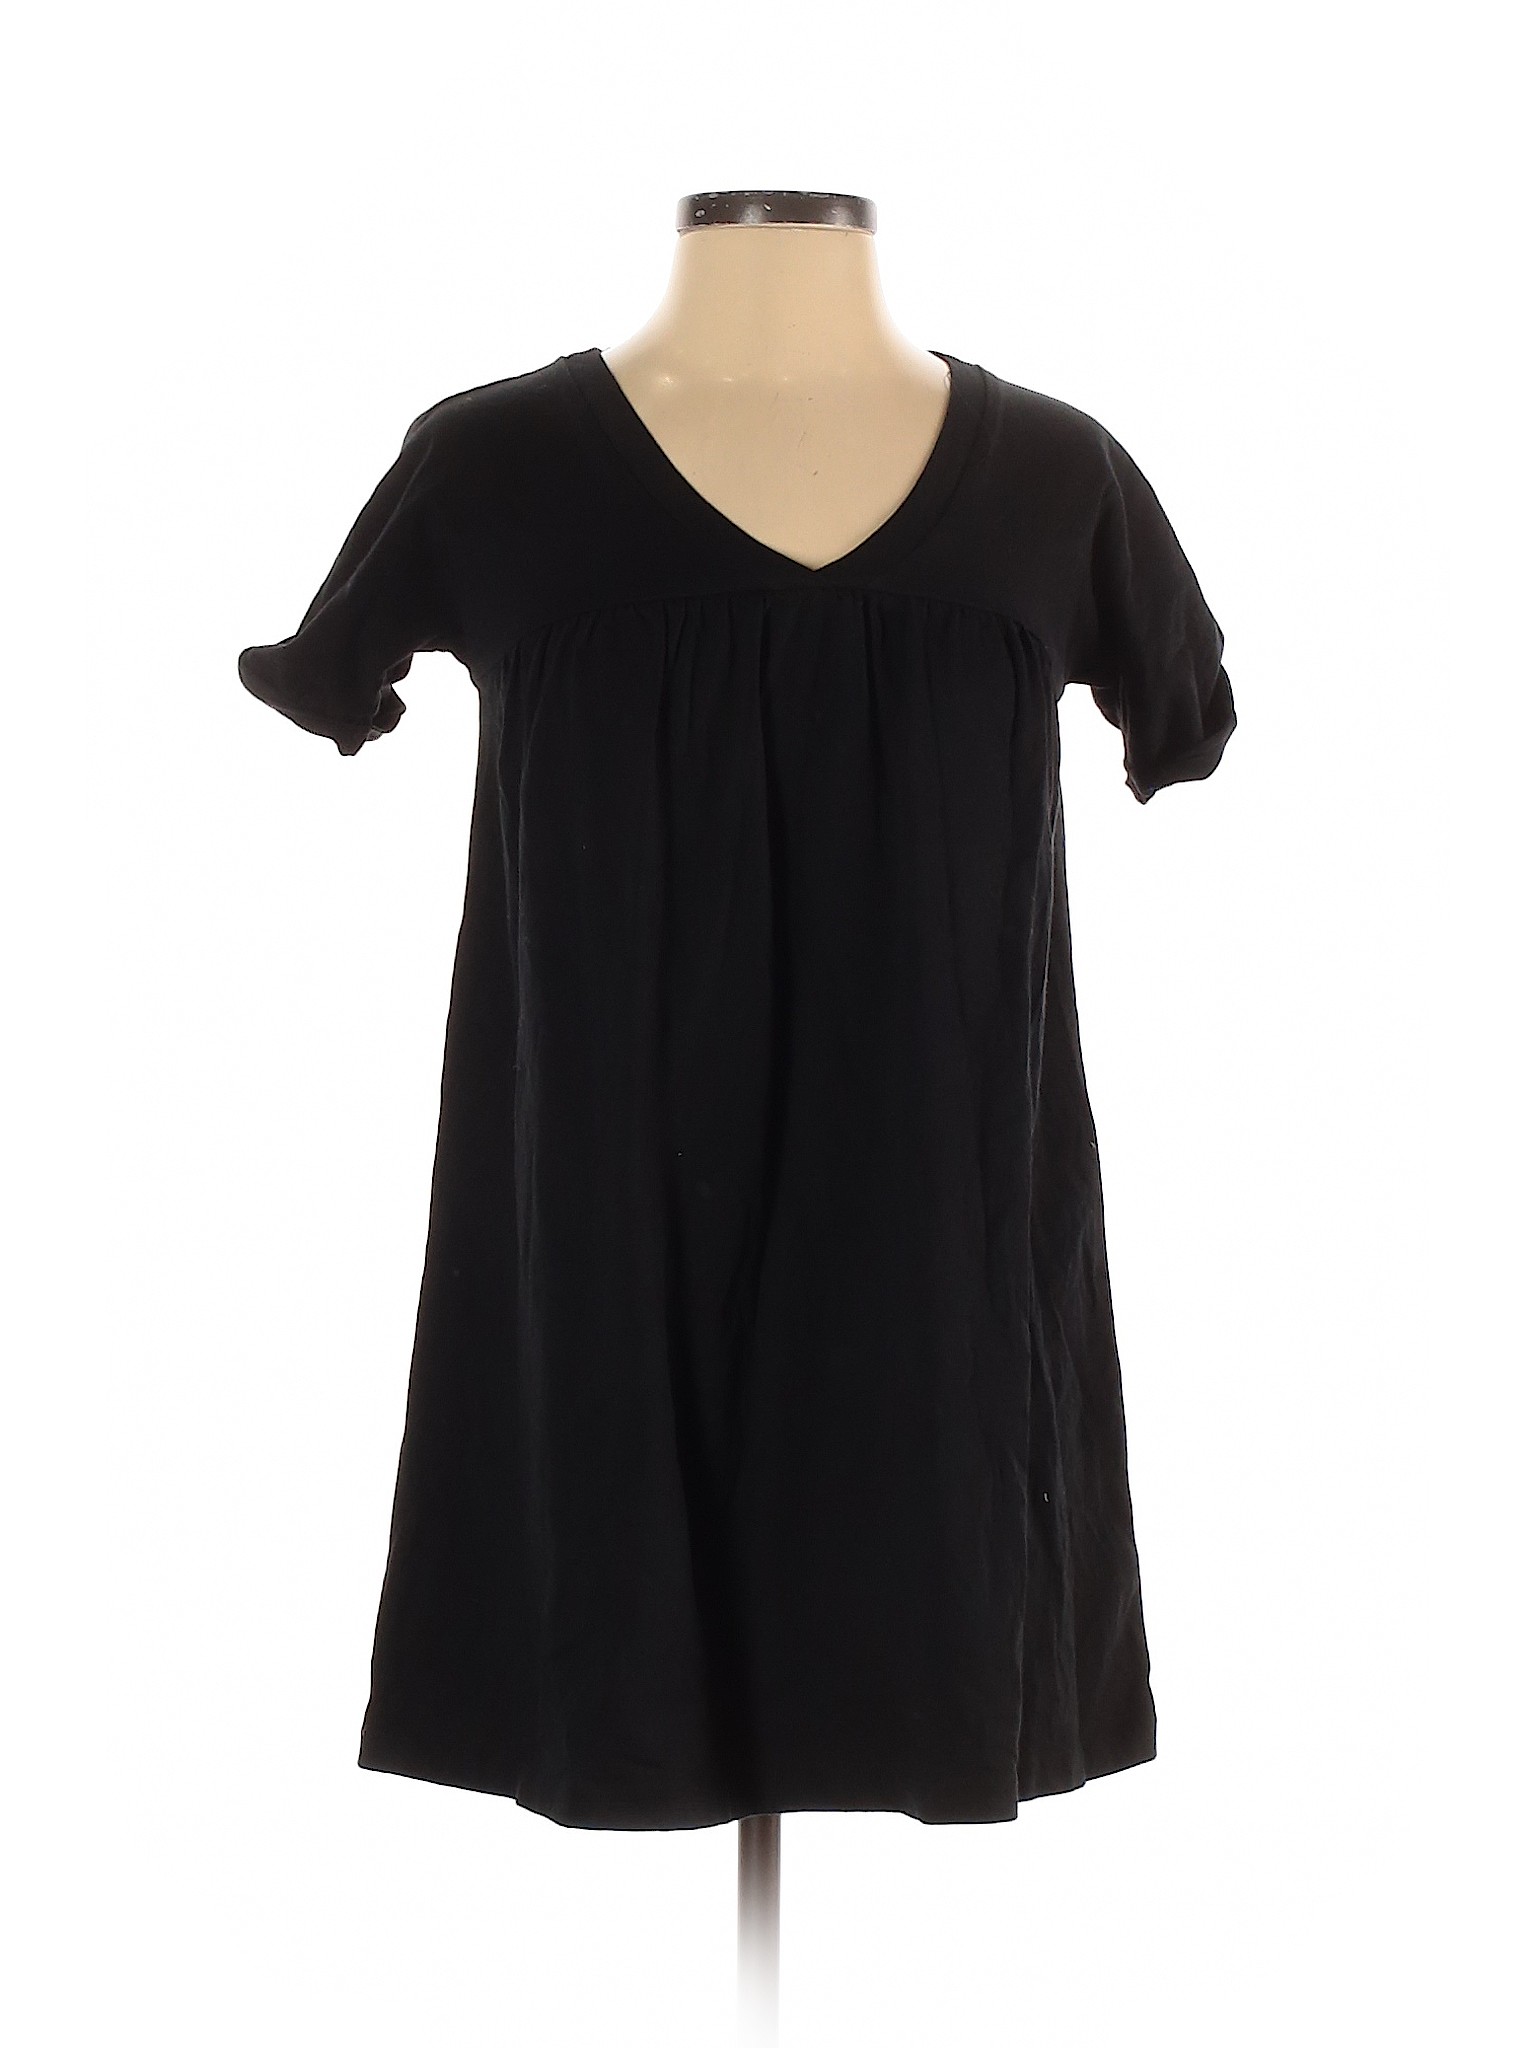 ASOS Women Black Casual Dress 00 | eBay